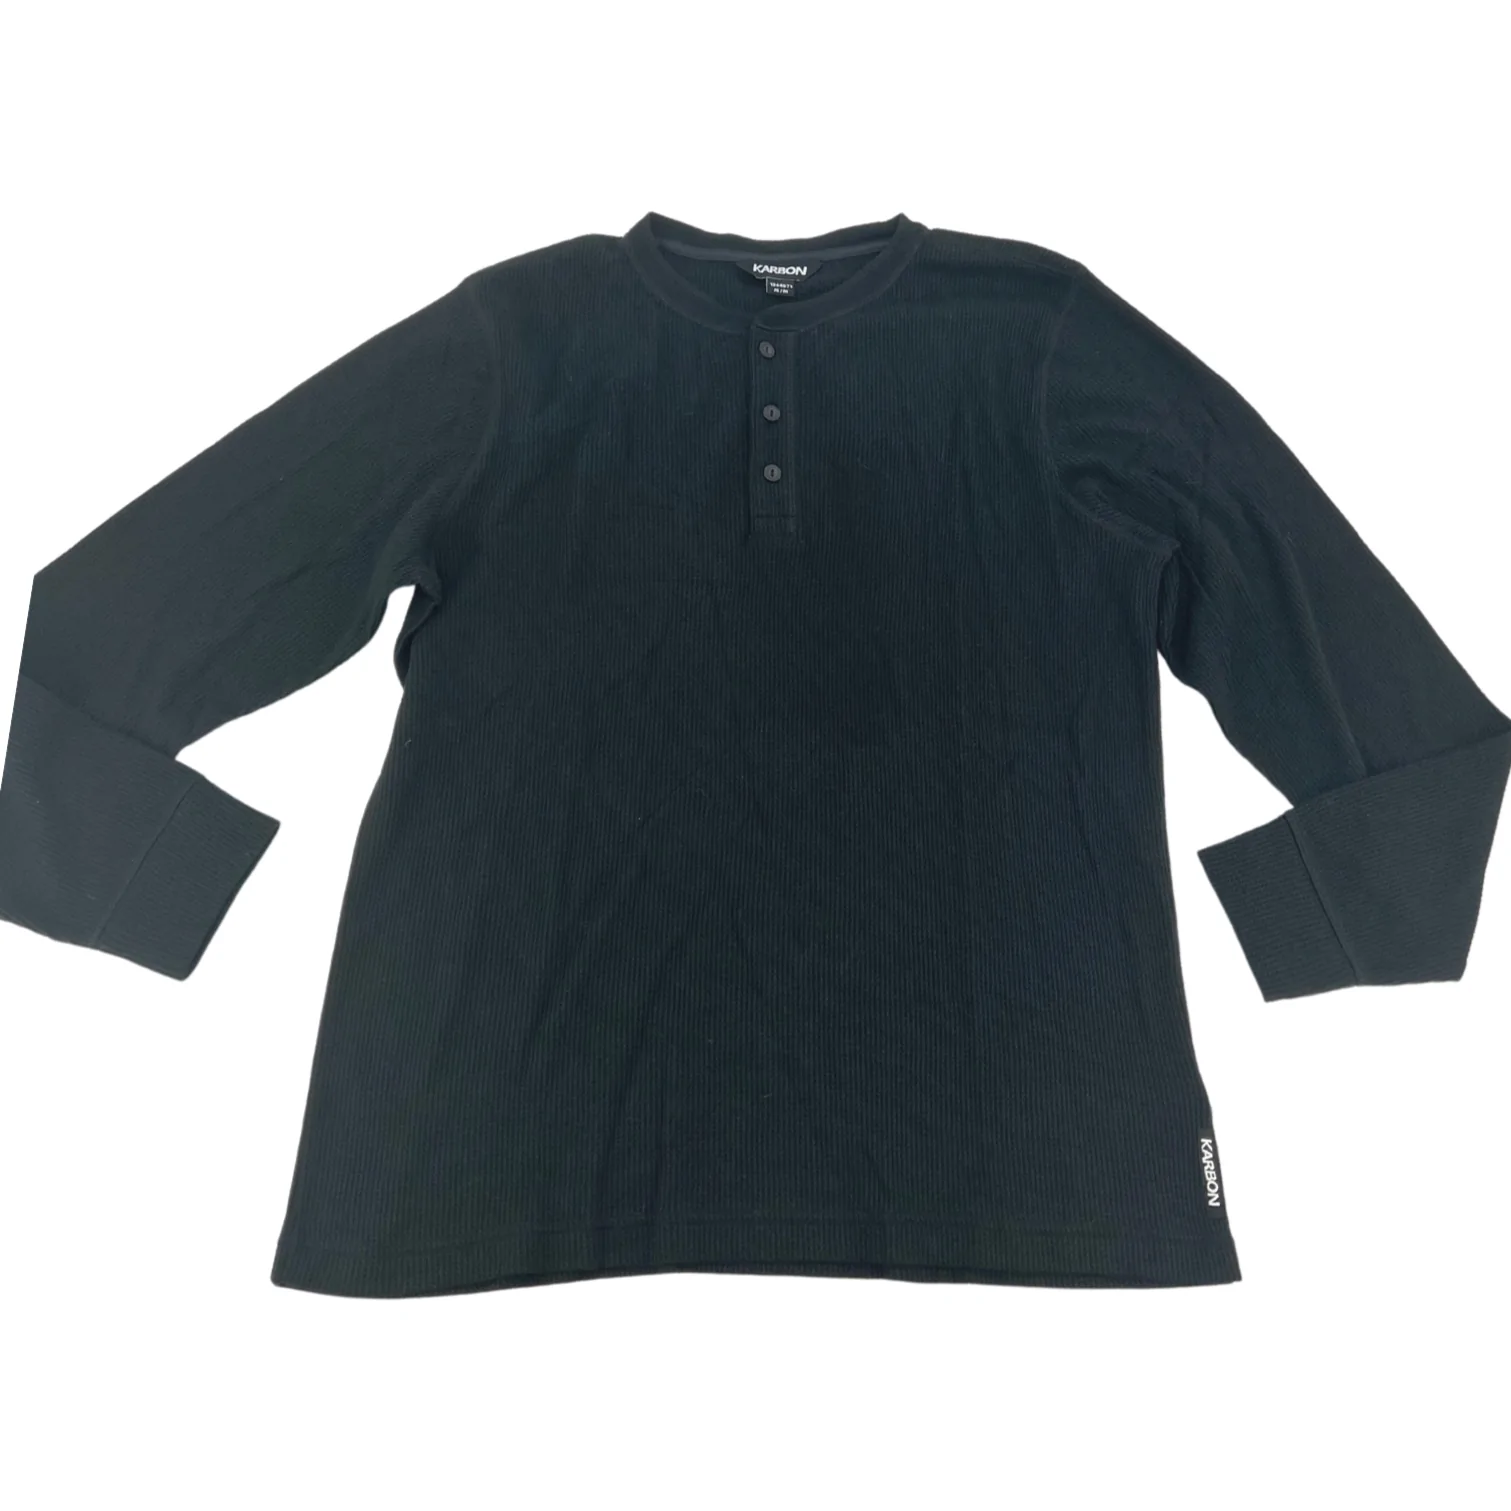 Karbon Men's Henley Shirt / Long Sleeve Top / Black / Size Medium